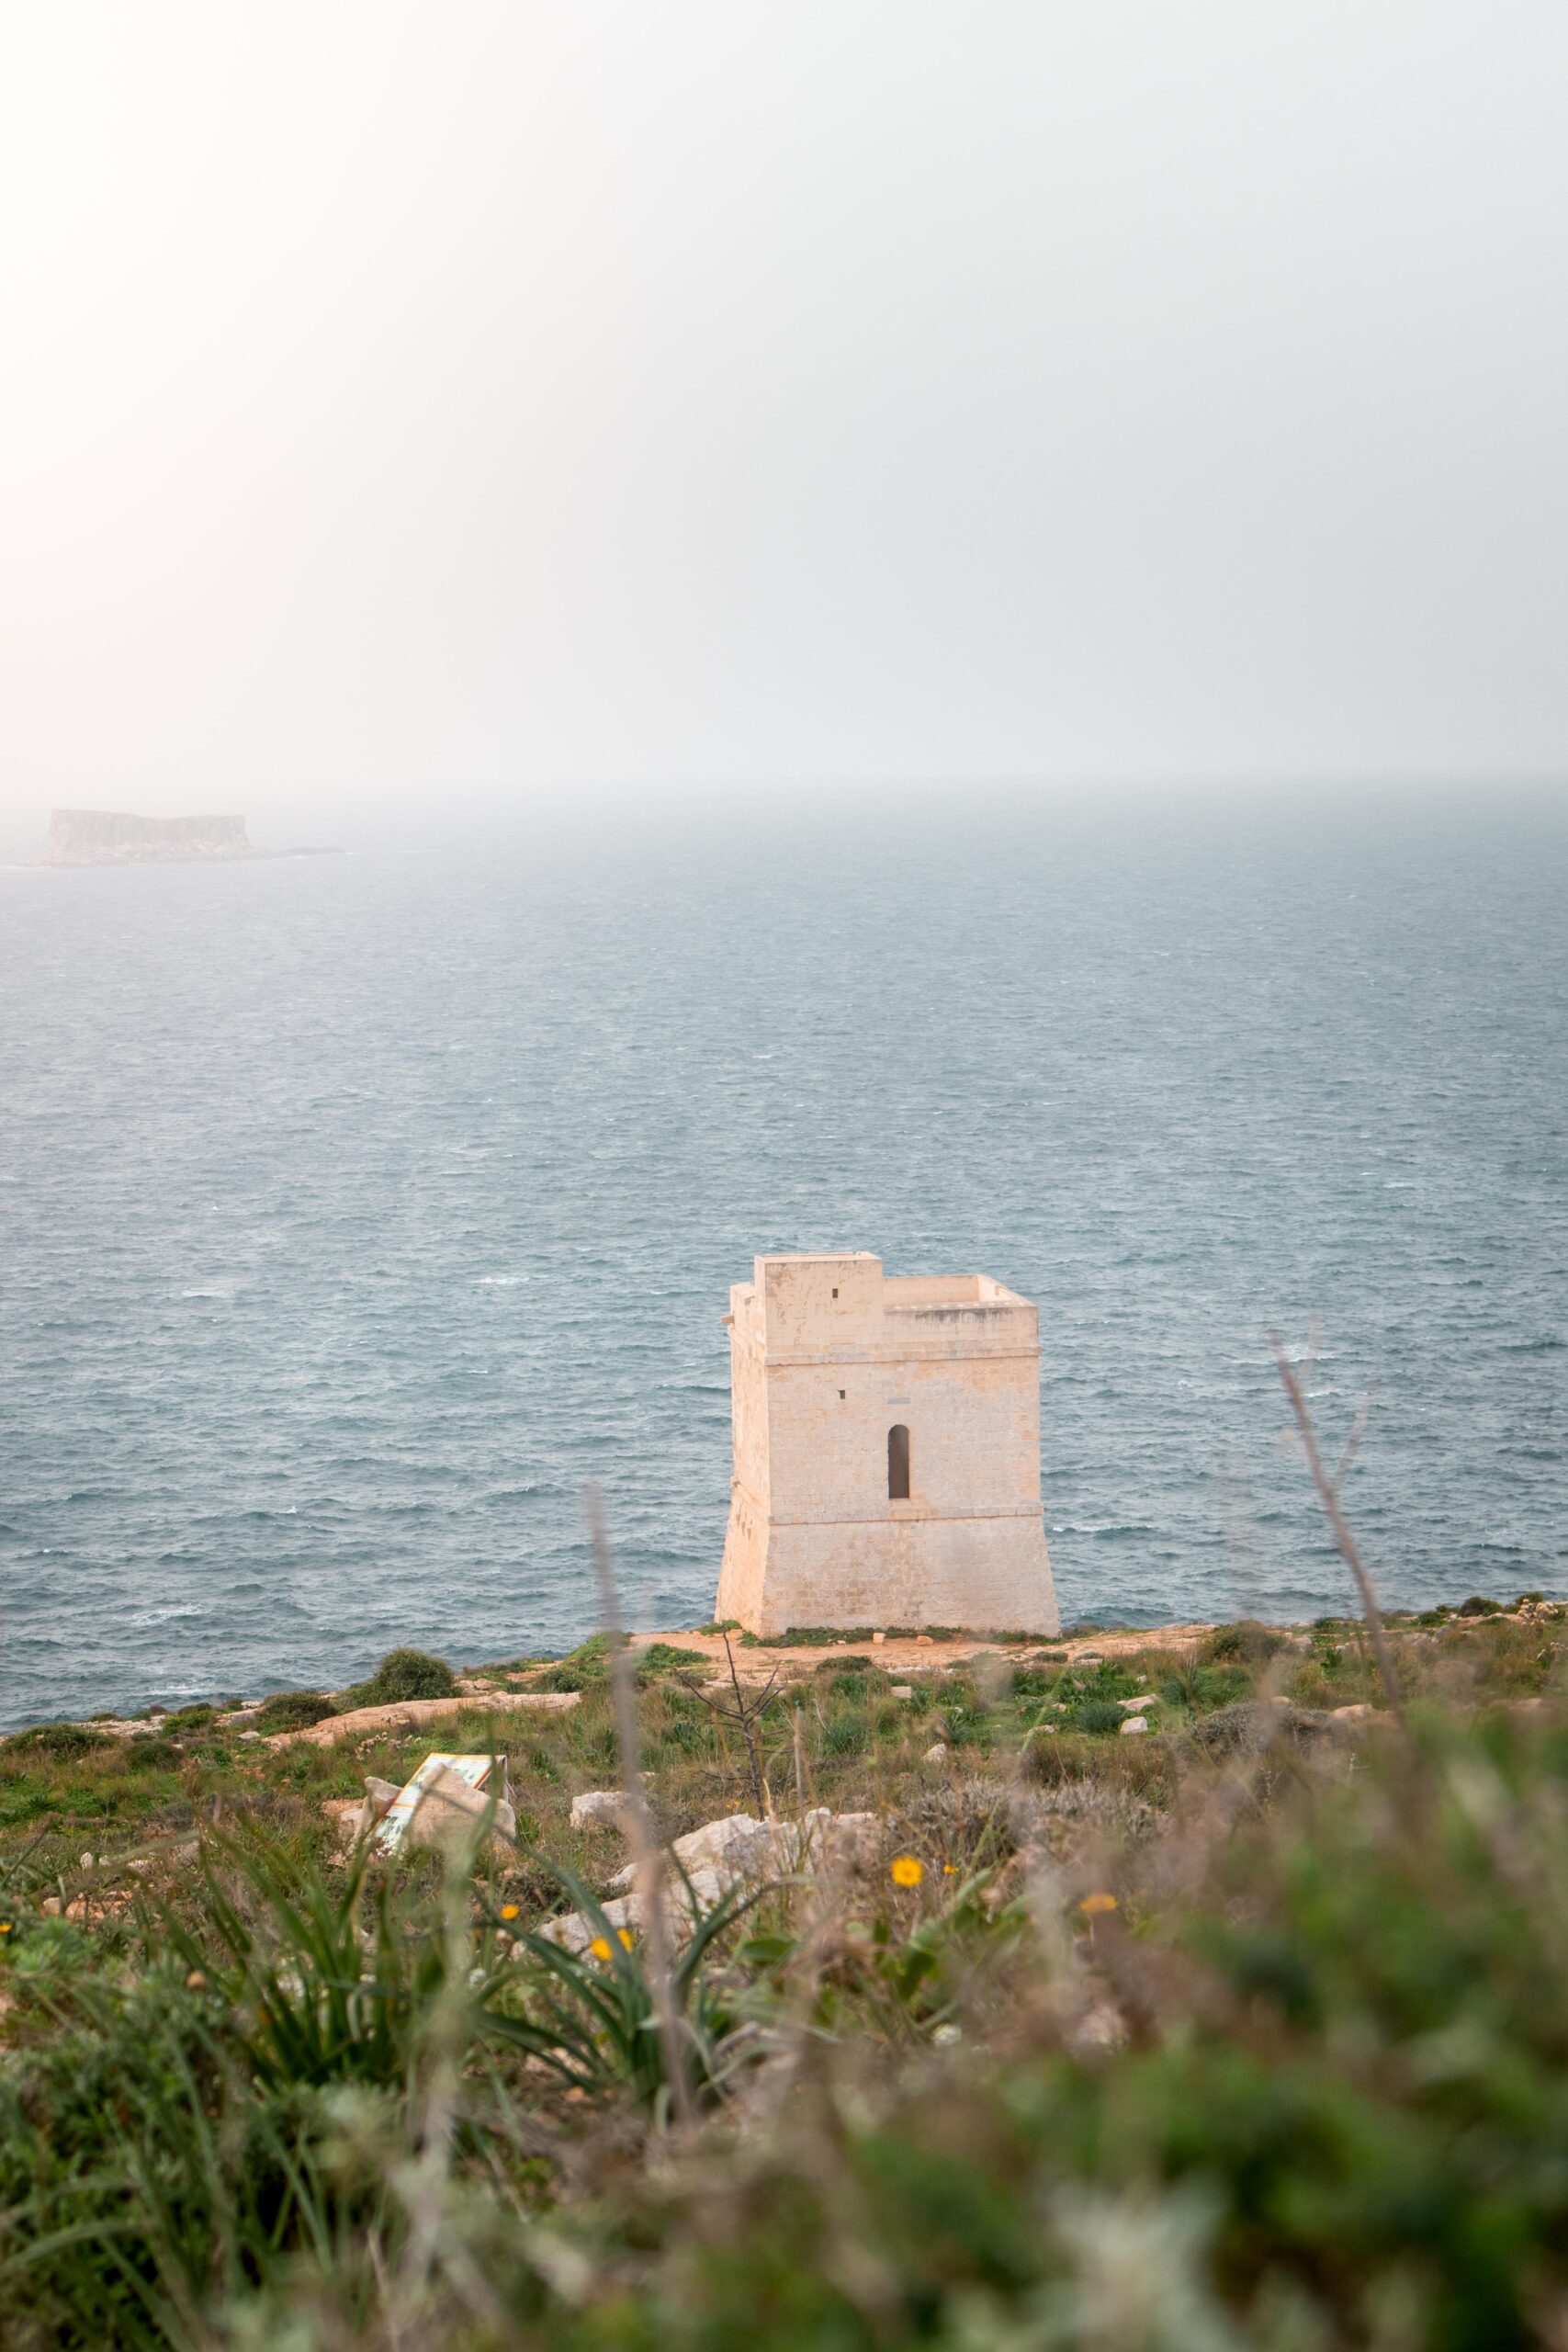 Ħamrija Coastal Tower with the Mediterranean sea and Filfla islet in the background in Malta